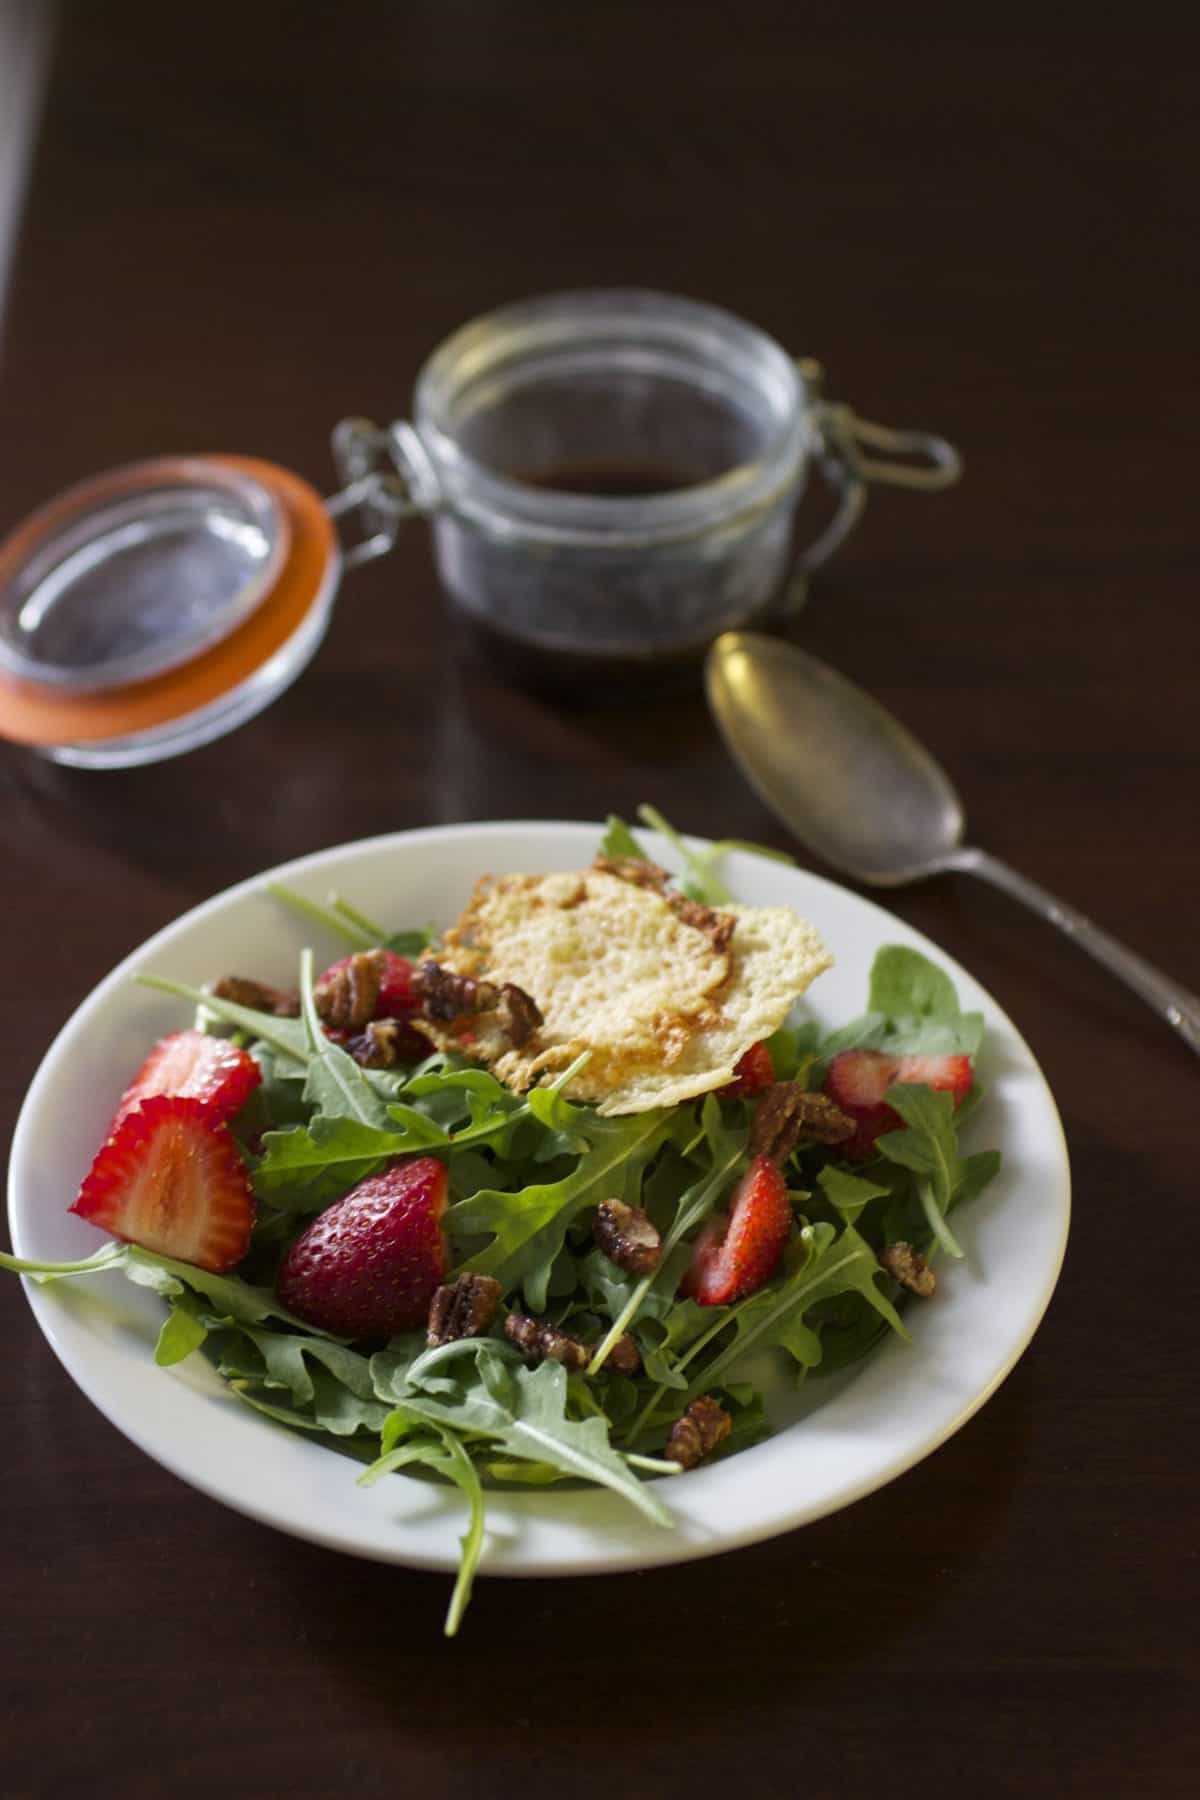 Strawberry Arugula Salad